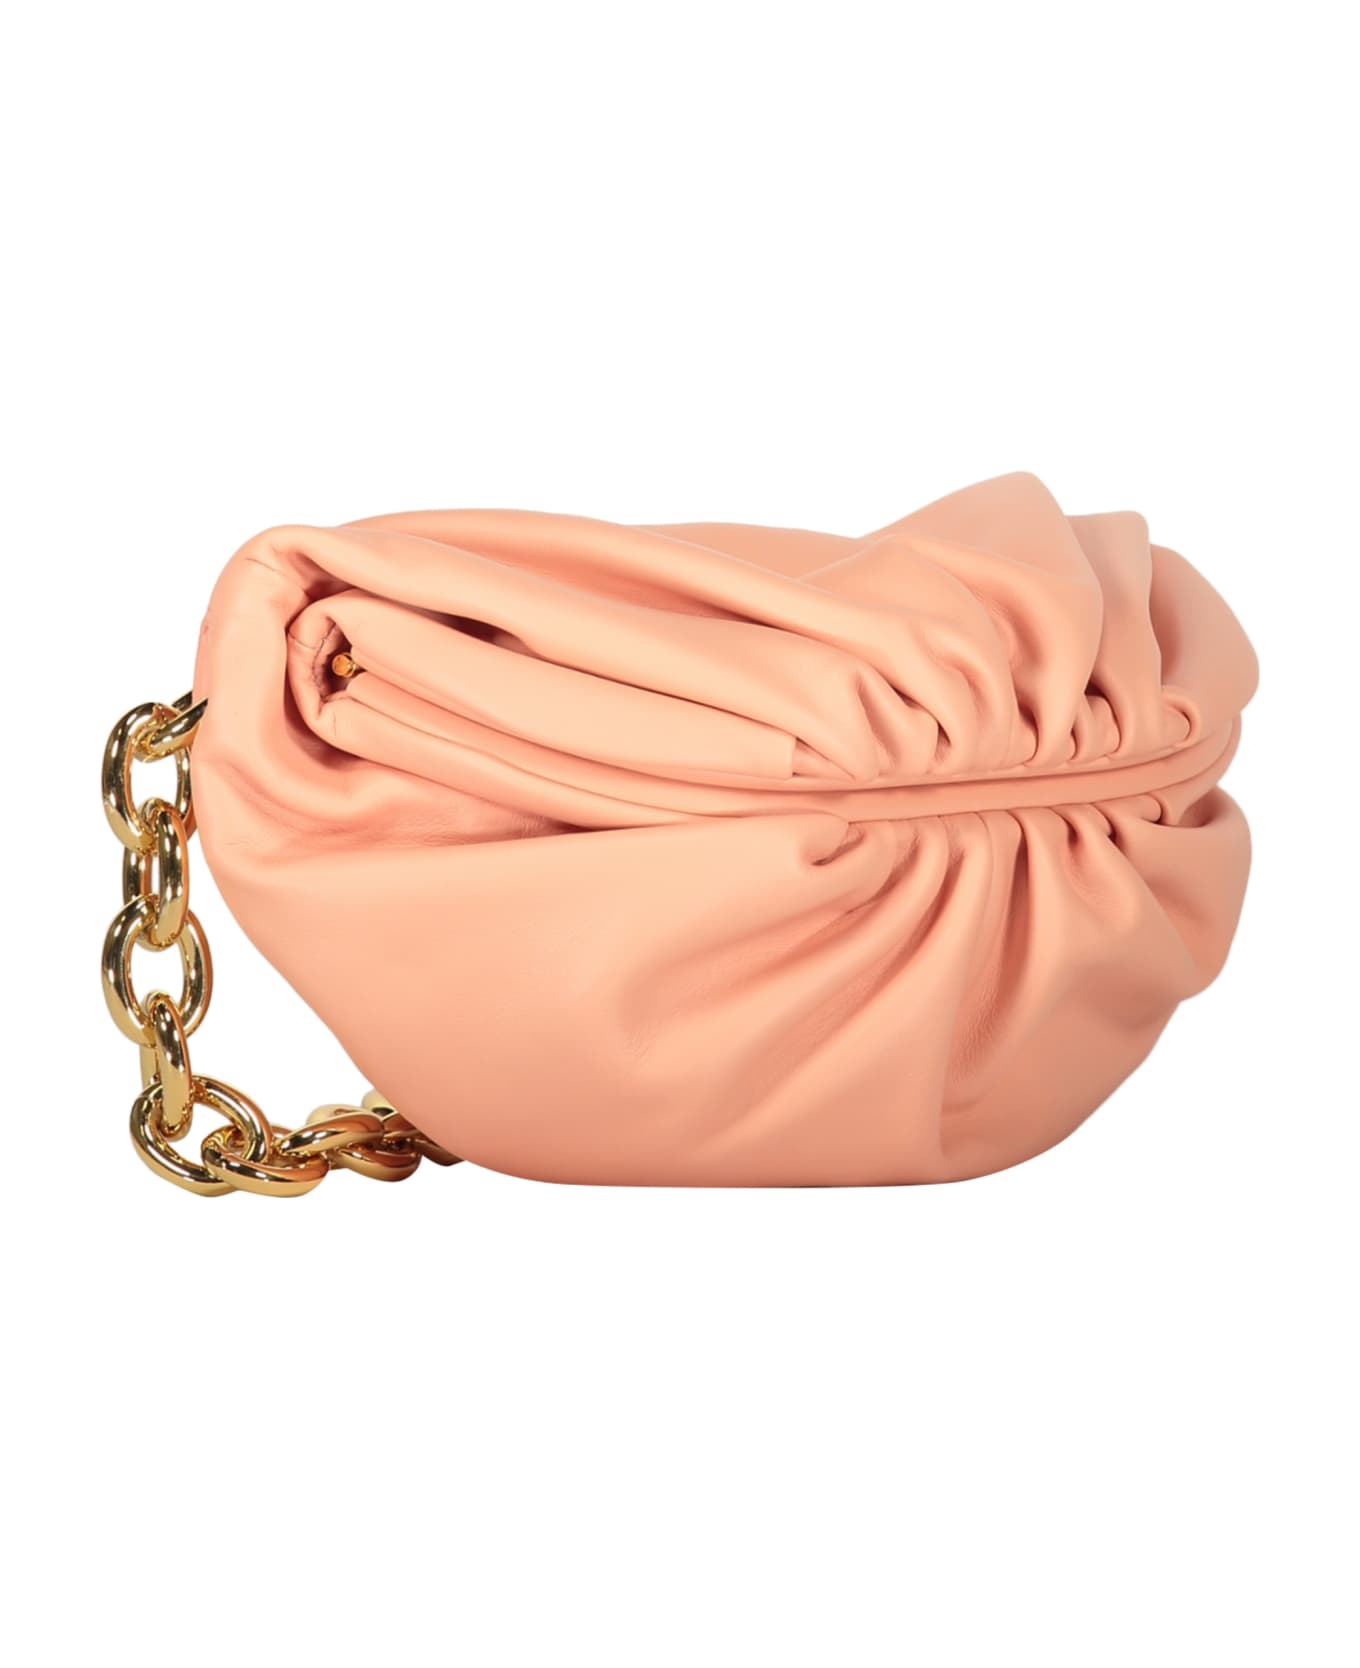 Bottega Veneta The Pouch Mini Leather Belt Bag - Pink